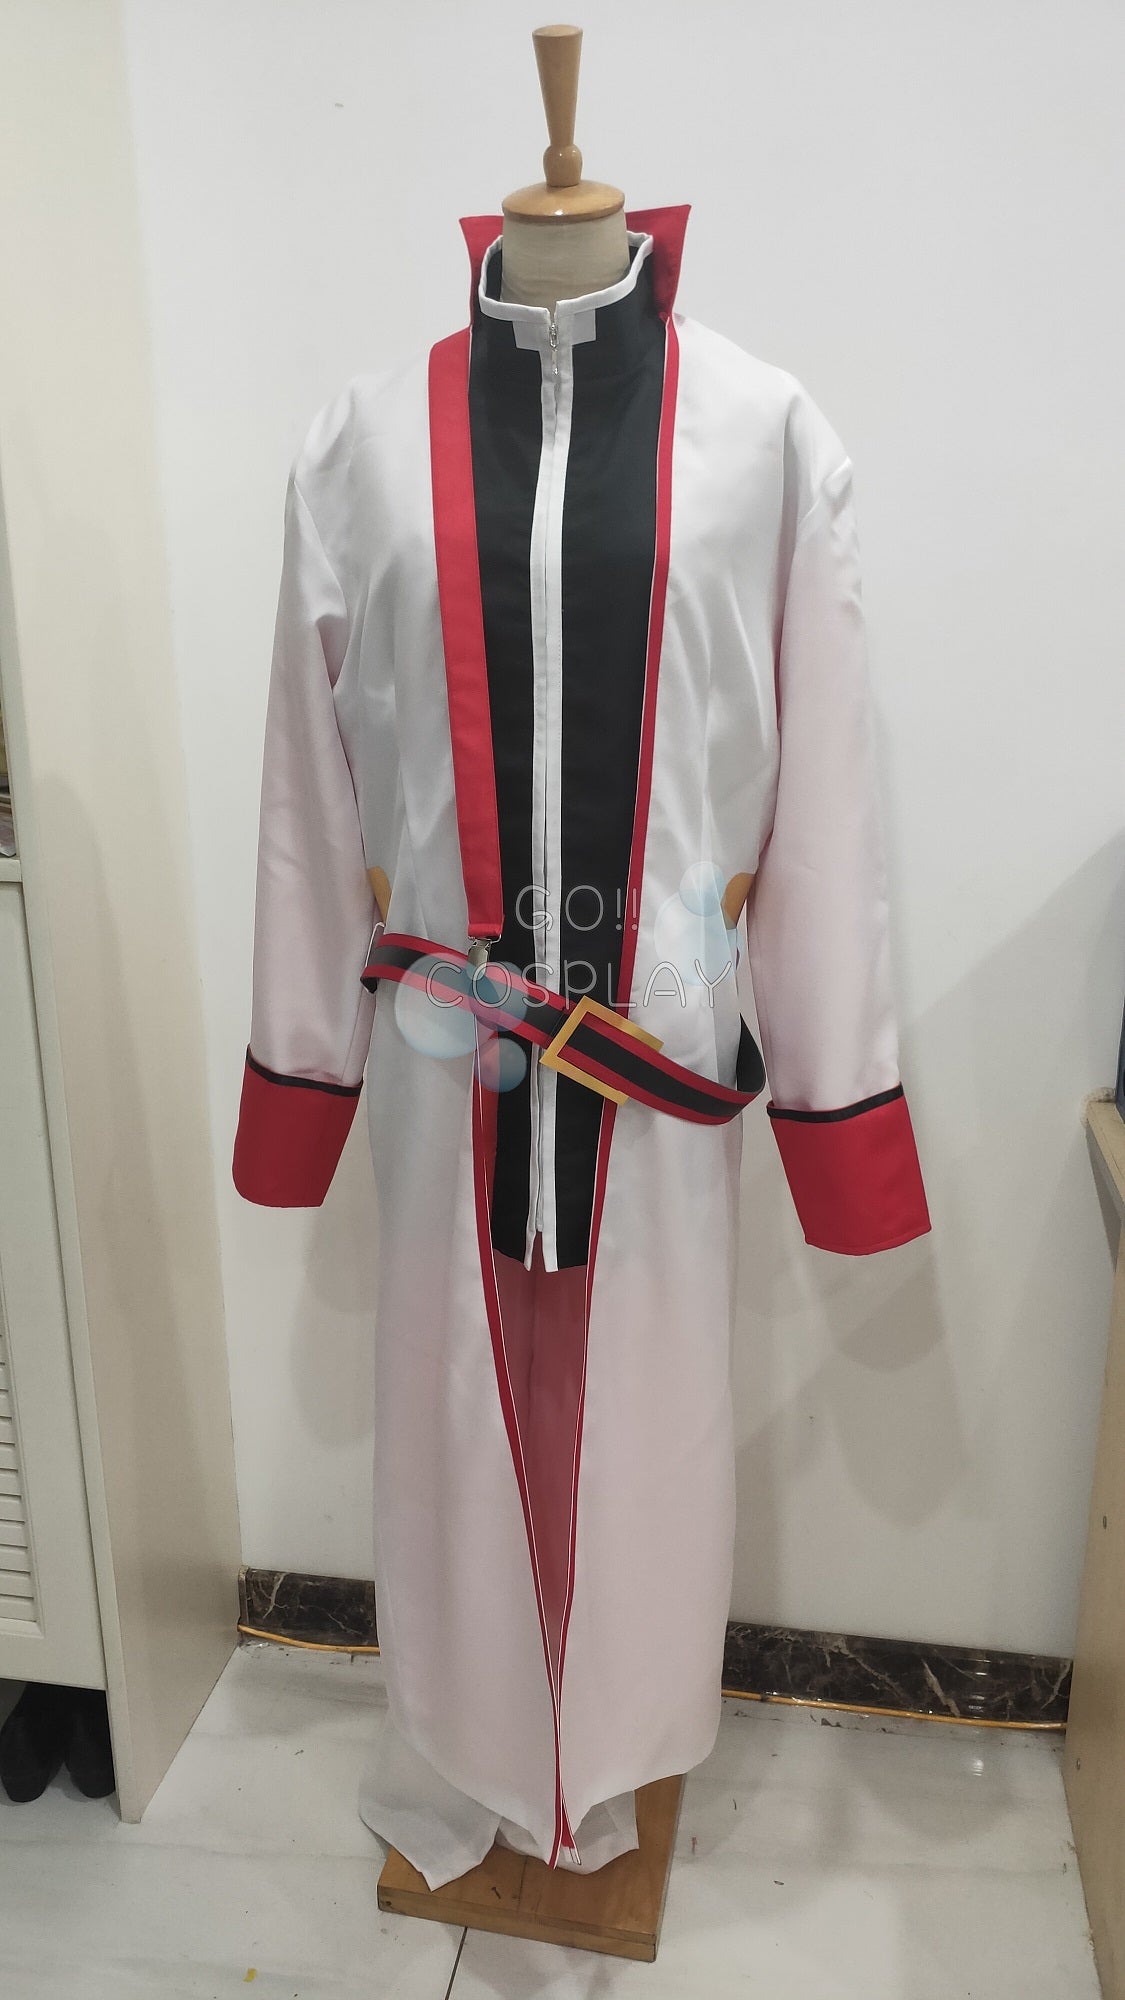 Ferris Cosplay Royal Guard Costume Buy